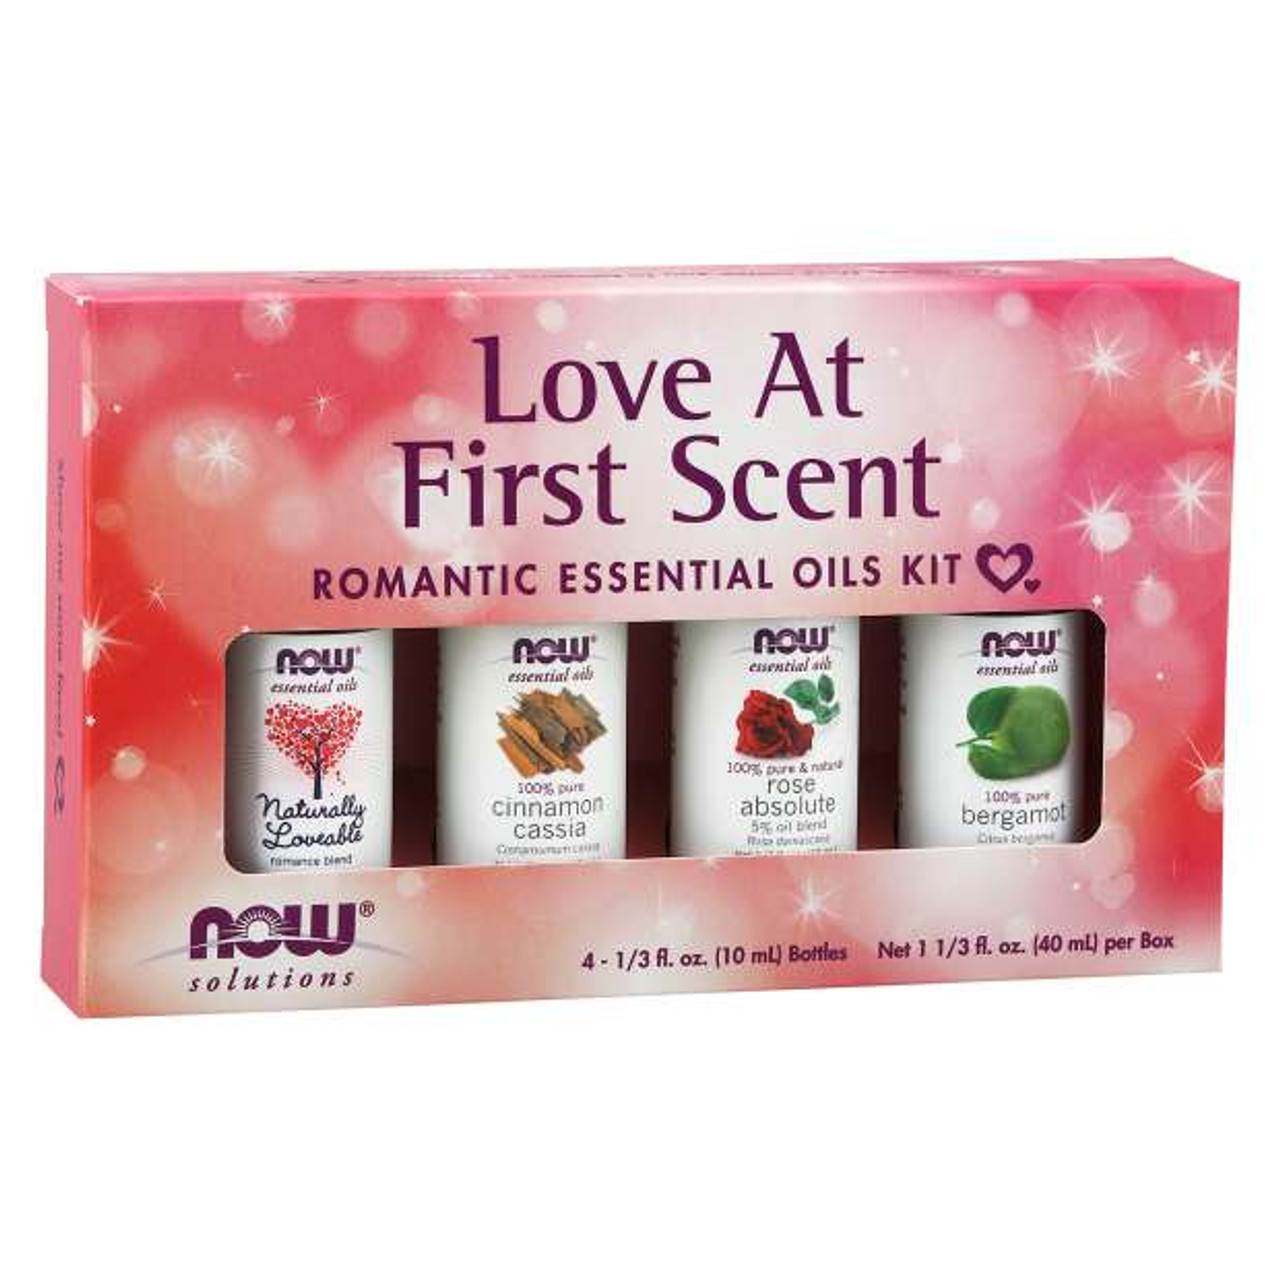 Love Essential Oil Blend